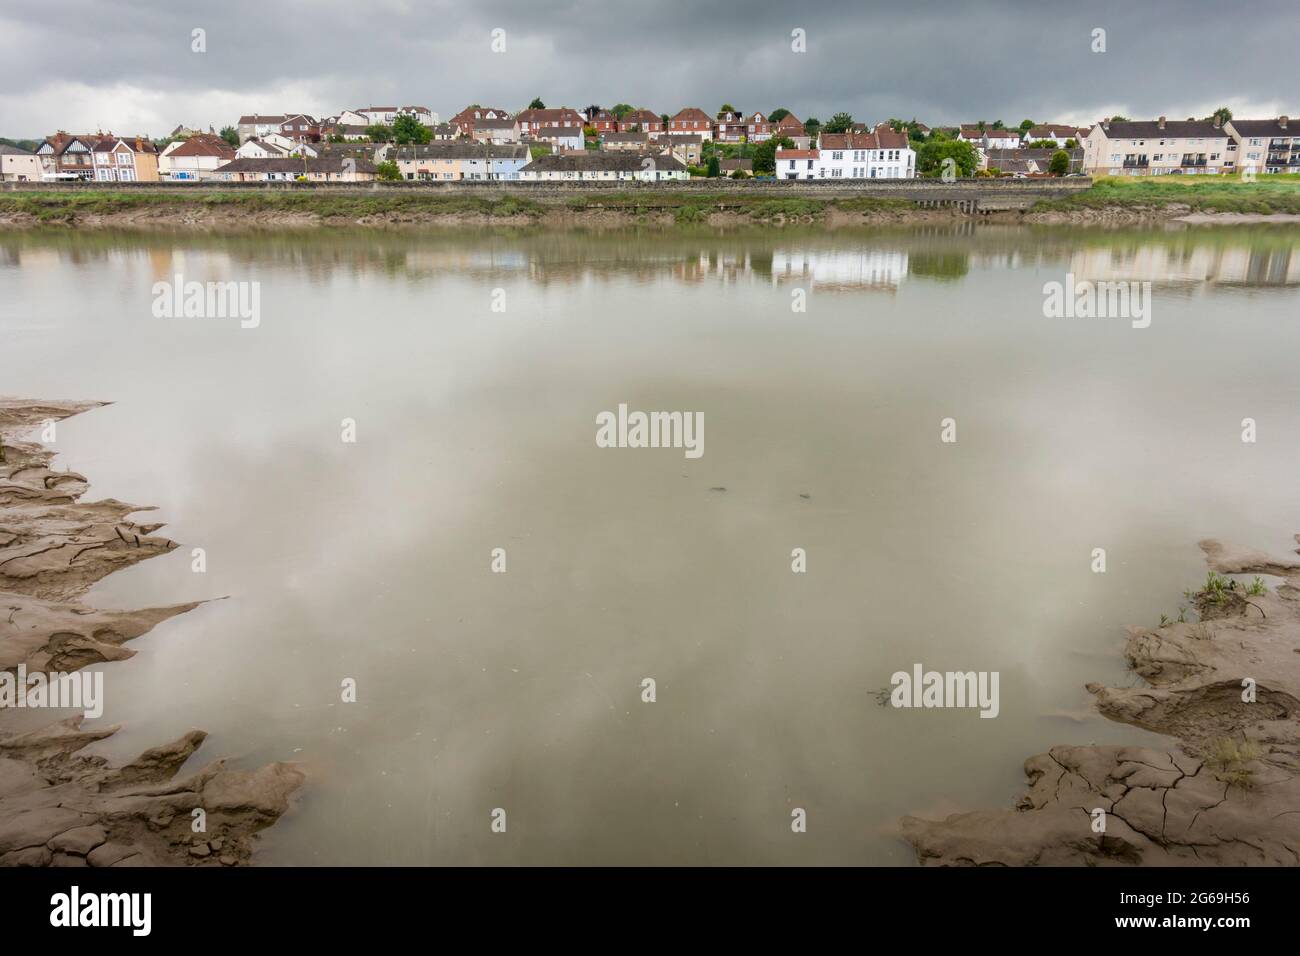 Pill, North Somerset, viewed across the River Avon from Shirehampton, Bristol. Stock Photo